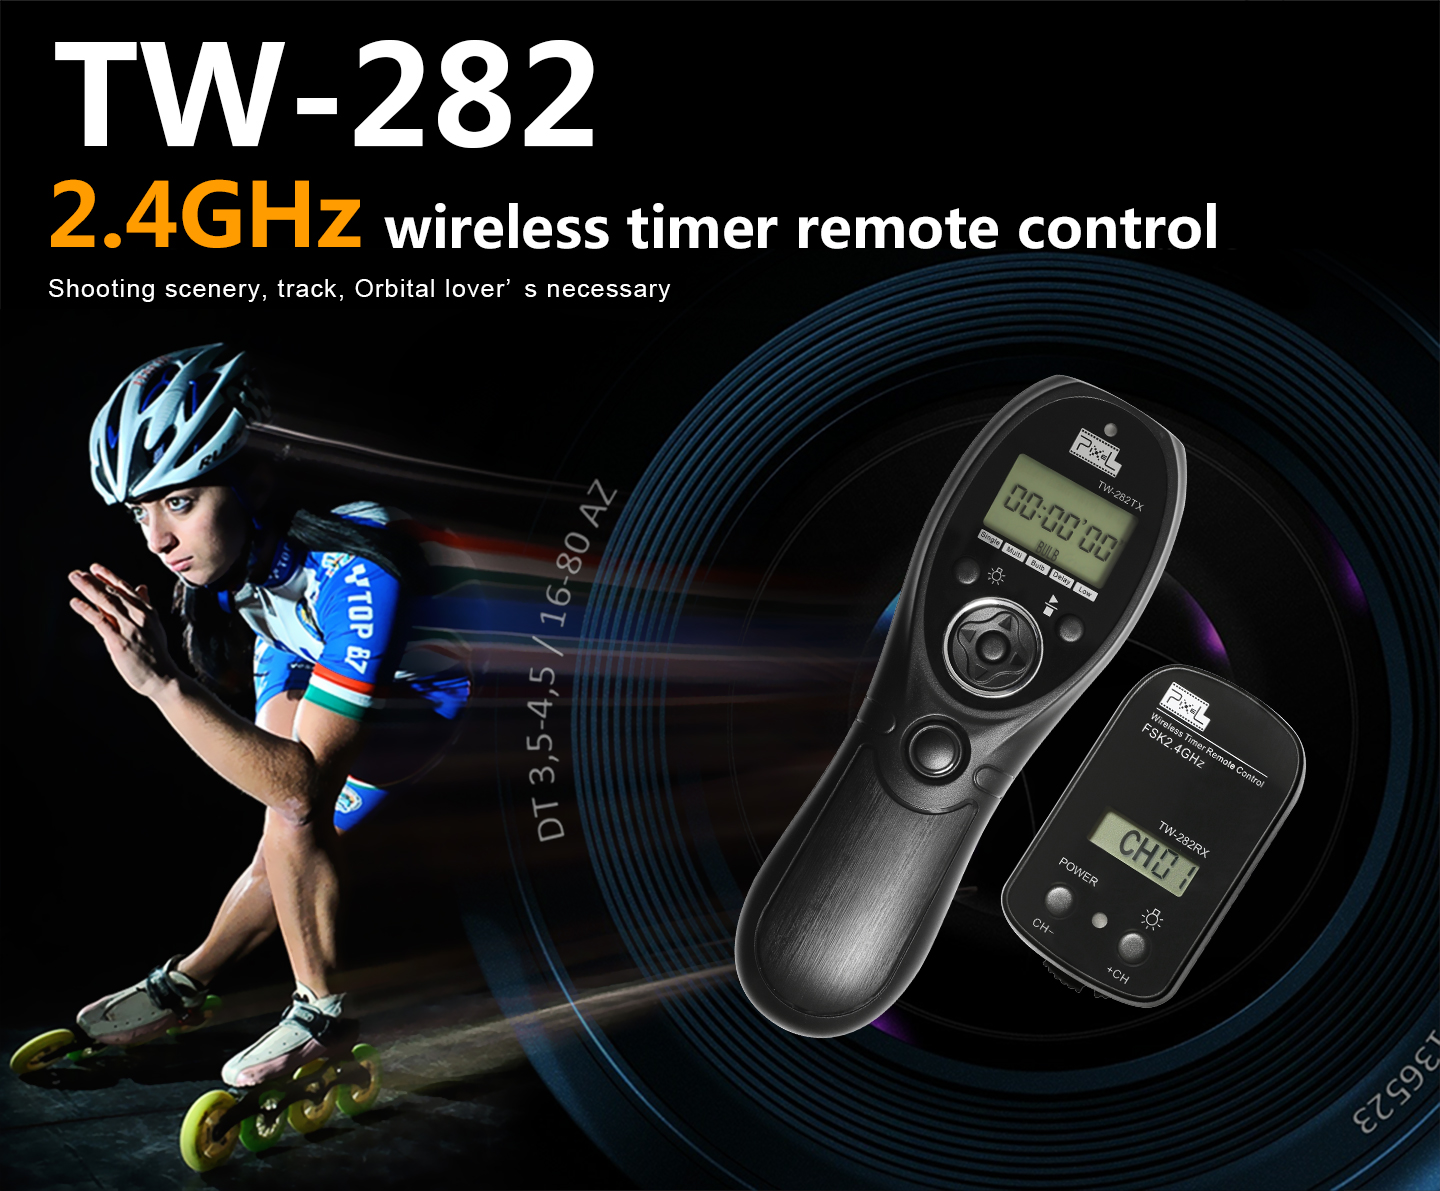 TW-282 2.4GHz wireless timer remote control